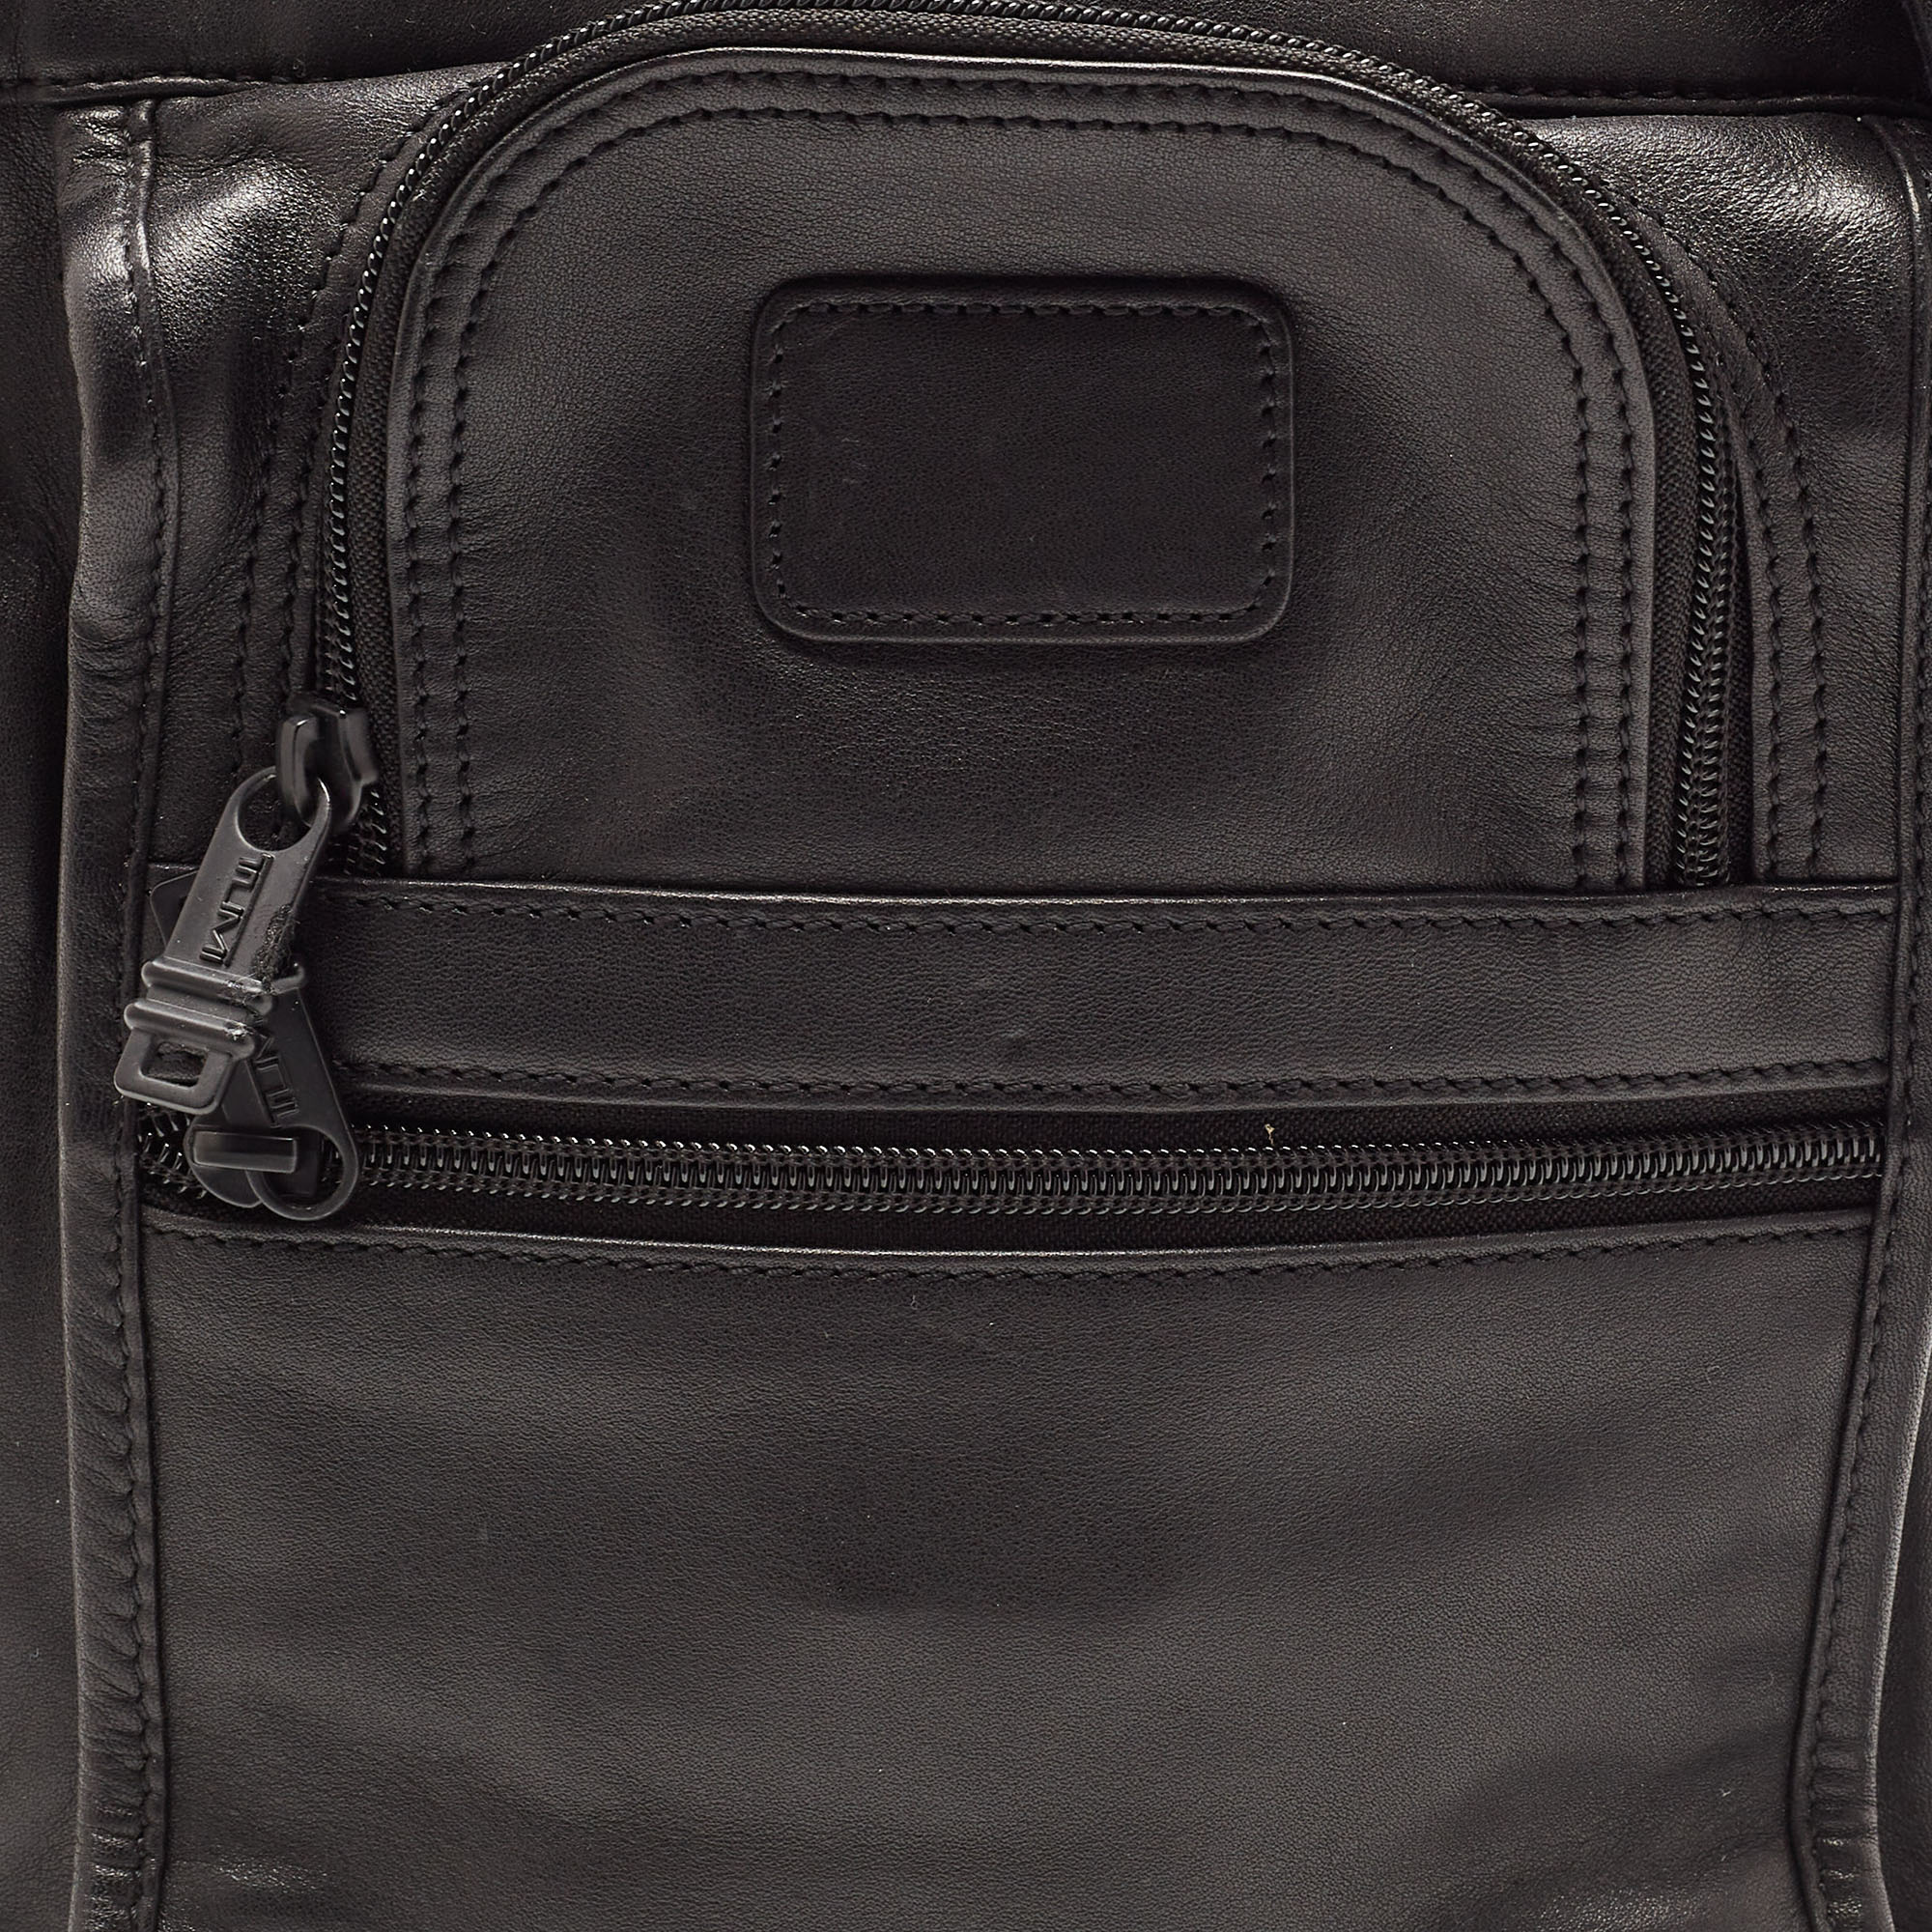 Tumi Black Leather Double Zip Messenger Bag